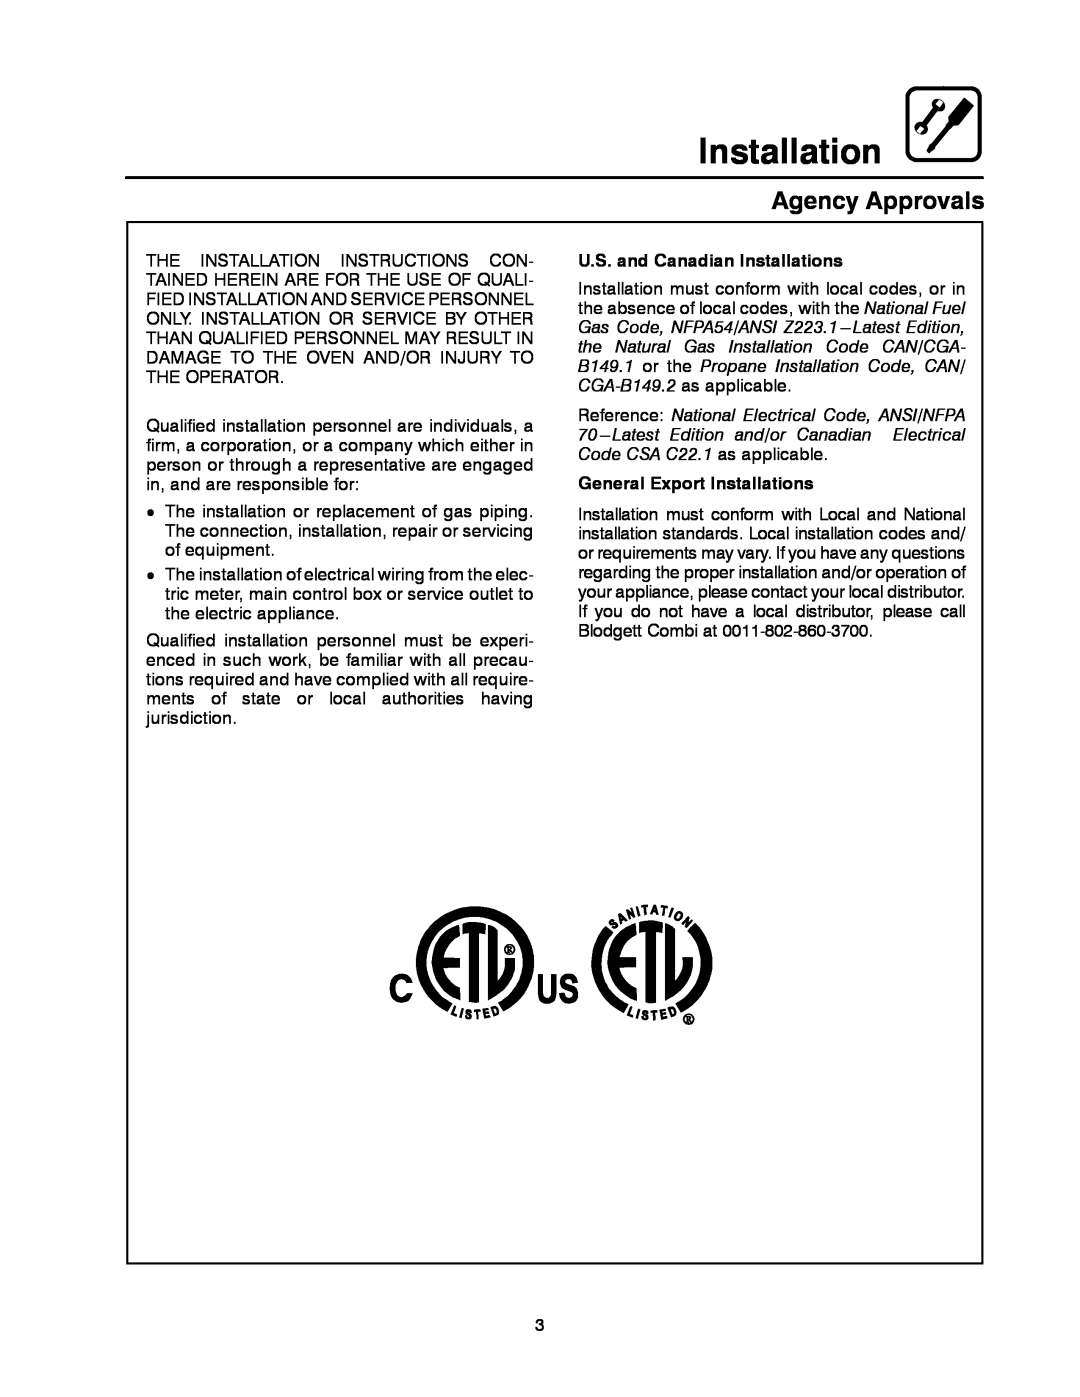 Blodgett CNV14E, CNV14G manual Agency Approvals, U.S. and Canadian Installations, General Export Installations 